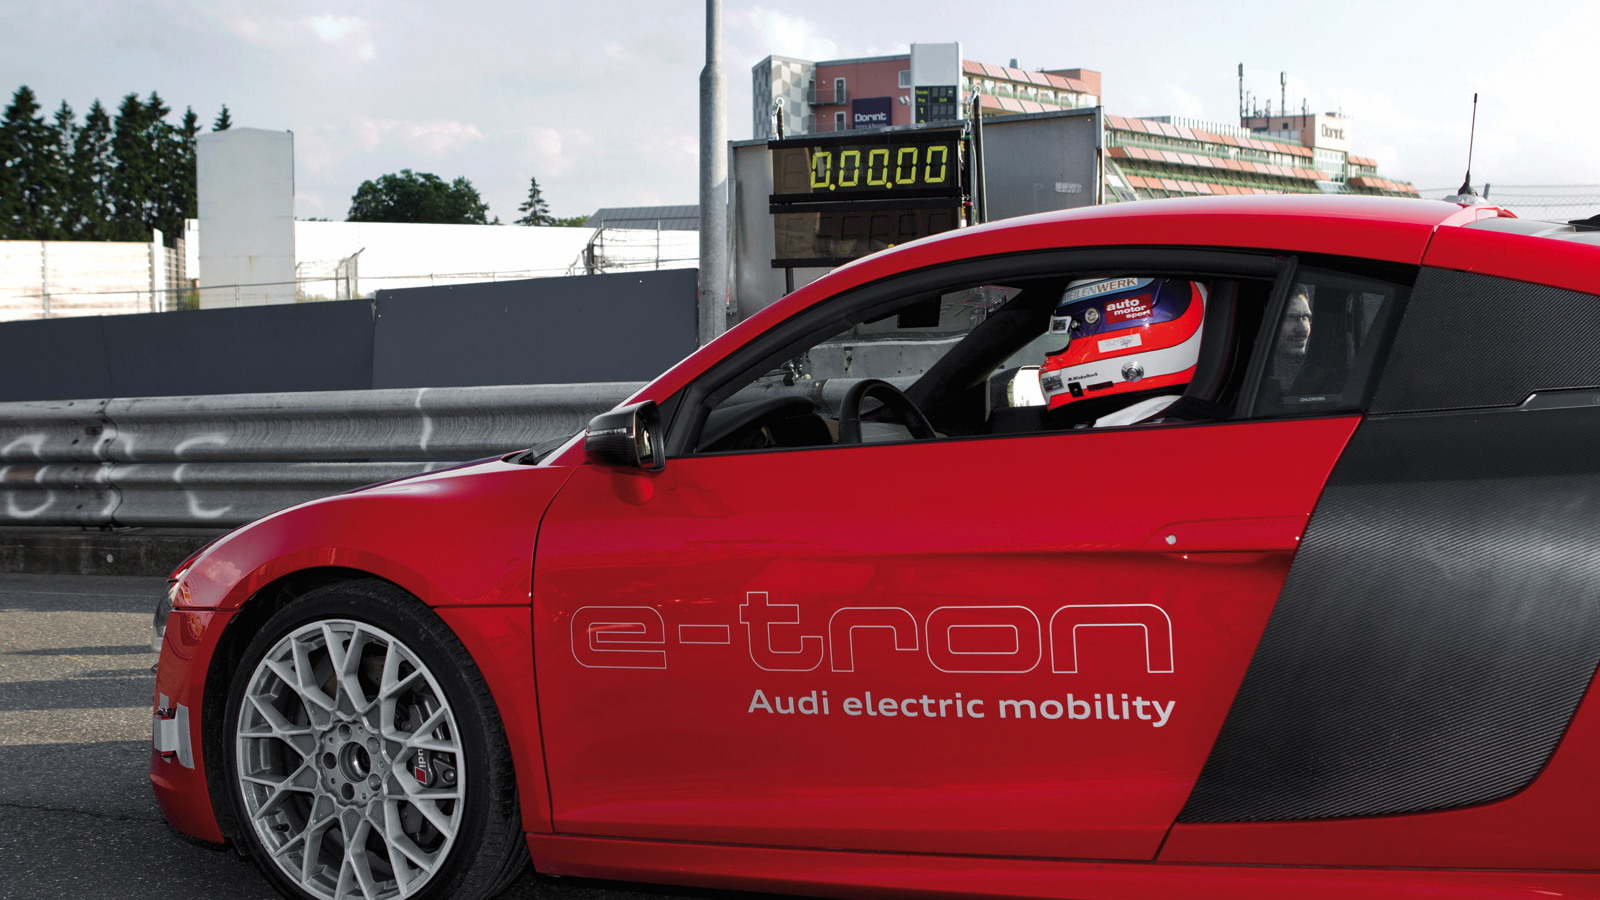 2013 Audi R8 e-tron with 8:09.099 Nürburgring lap time